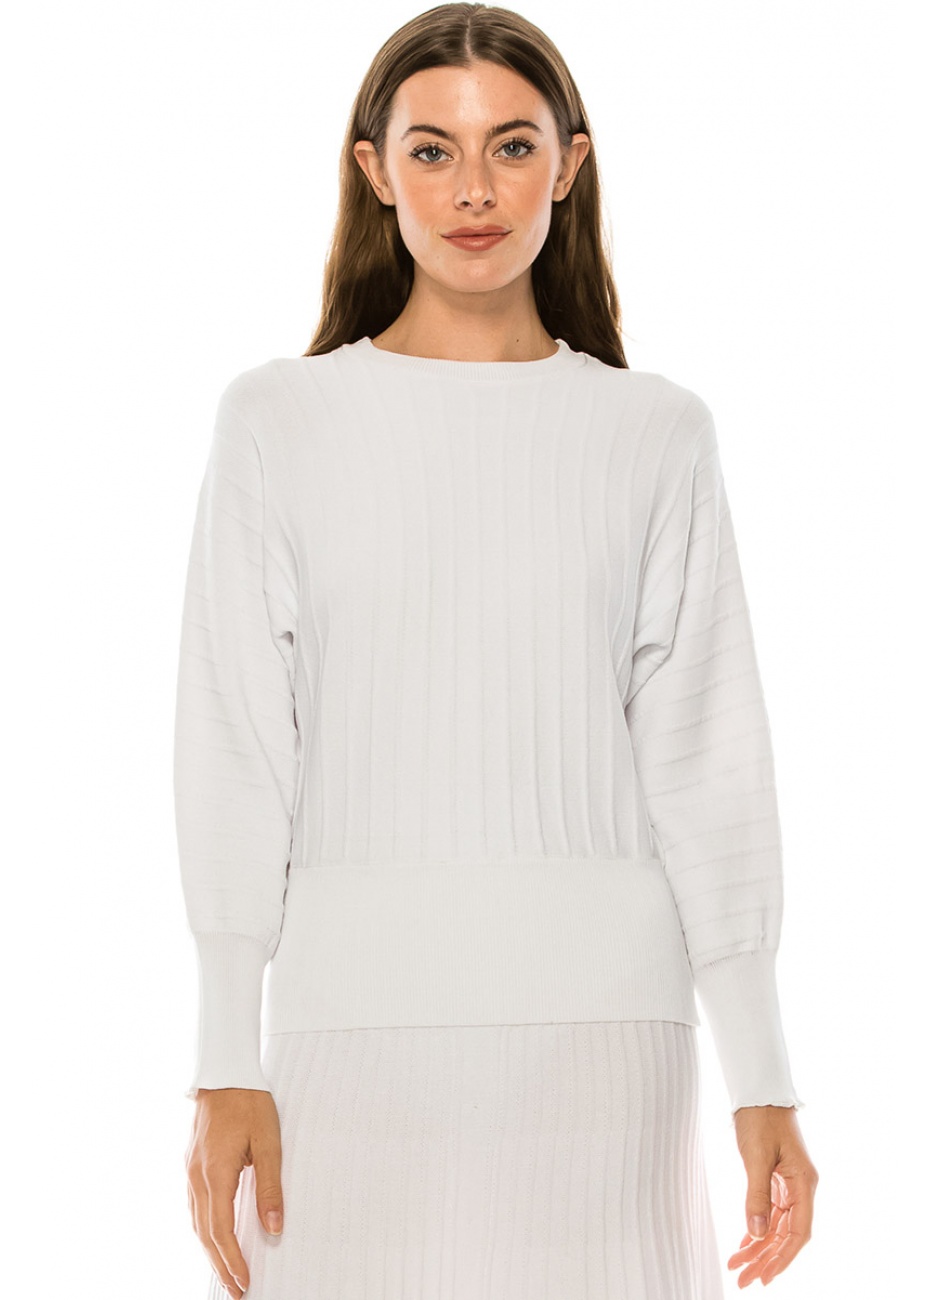 Sweater KA169 White